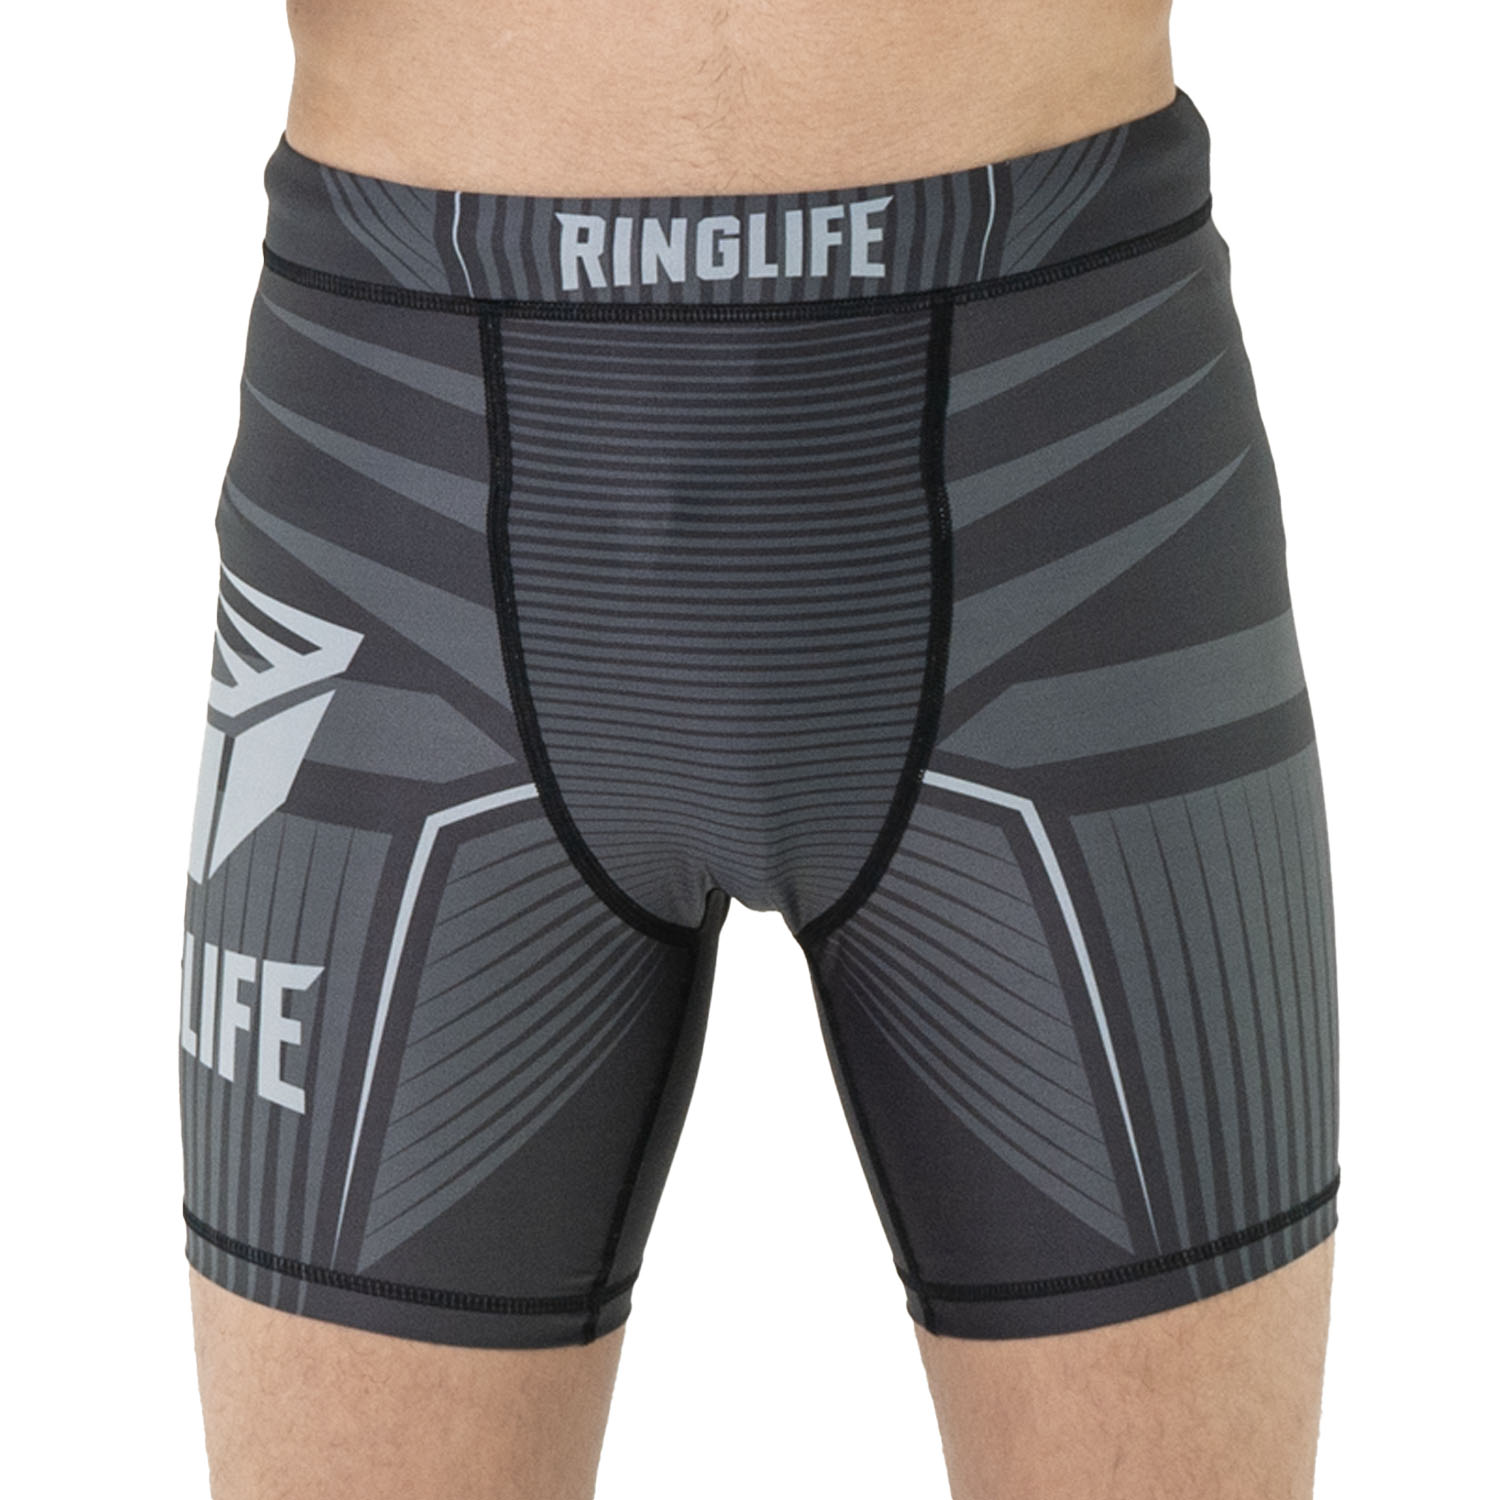 RINGLIFE Compression Shorts - Octaring black-grey